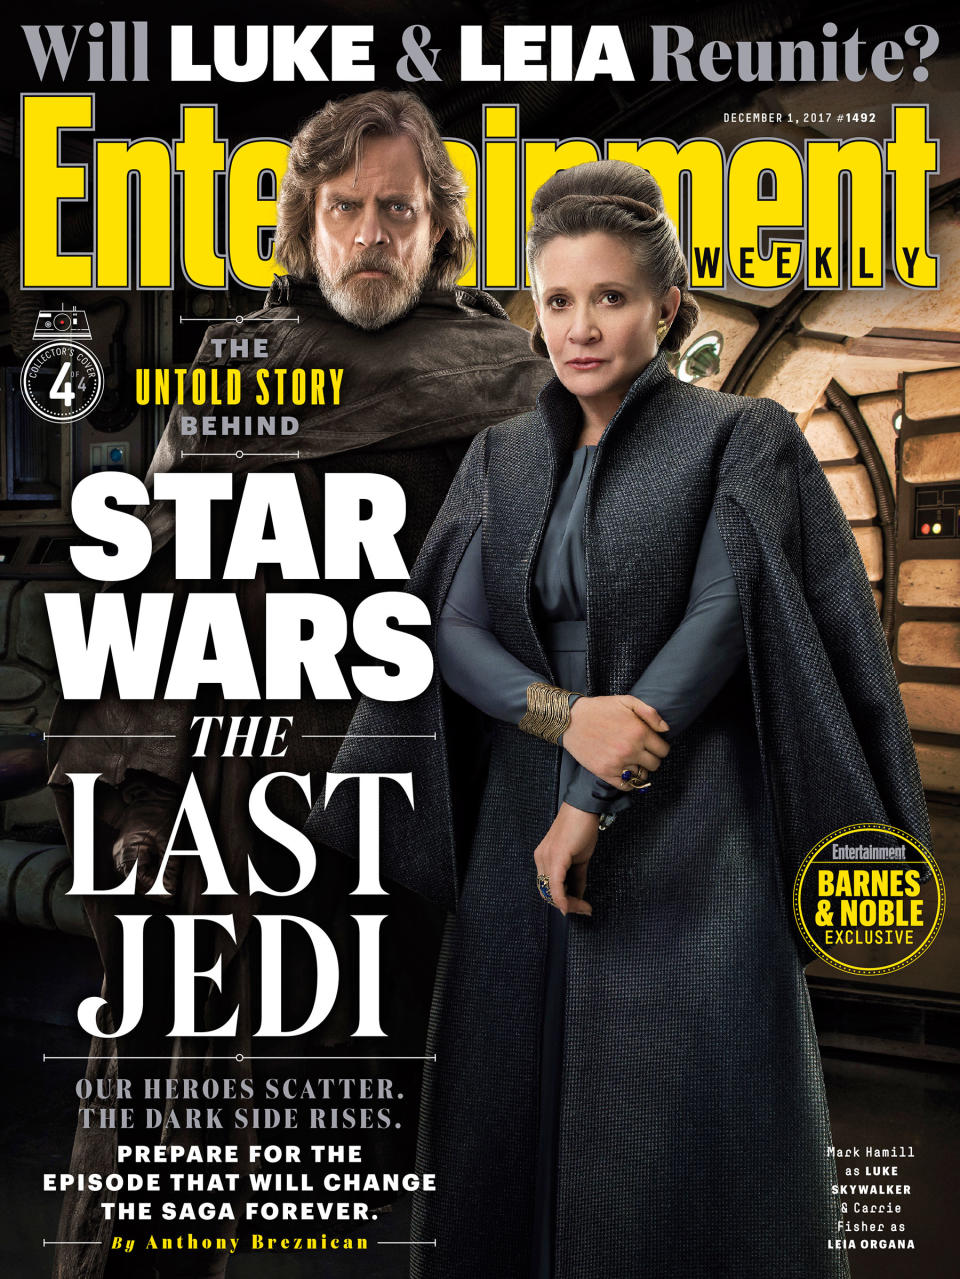 Luke (Mark Hamill) and Leia (Carrie Fisher) reunite on the <em>EW</em> cover (Photo: <i>Entertainment Weekly</i>)